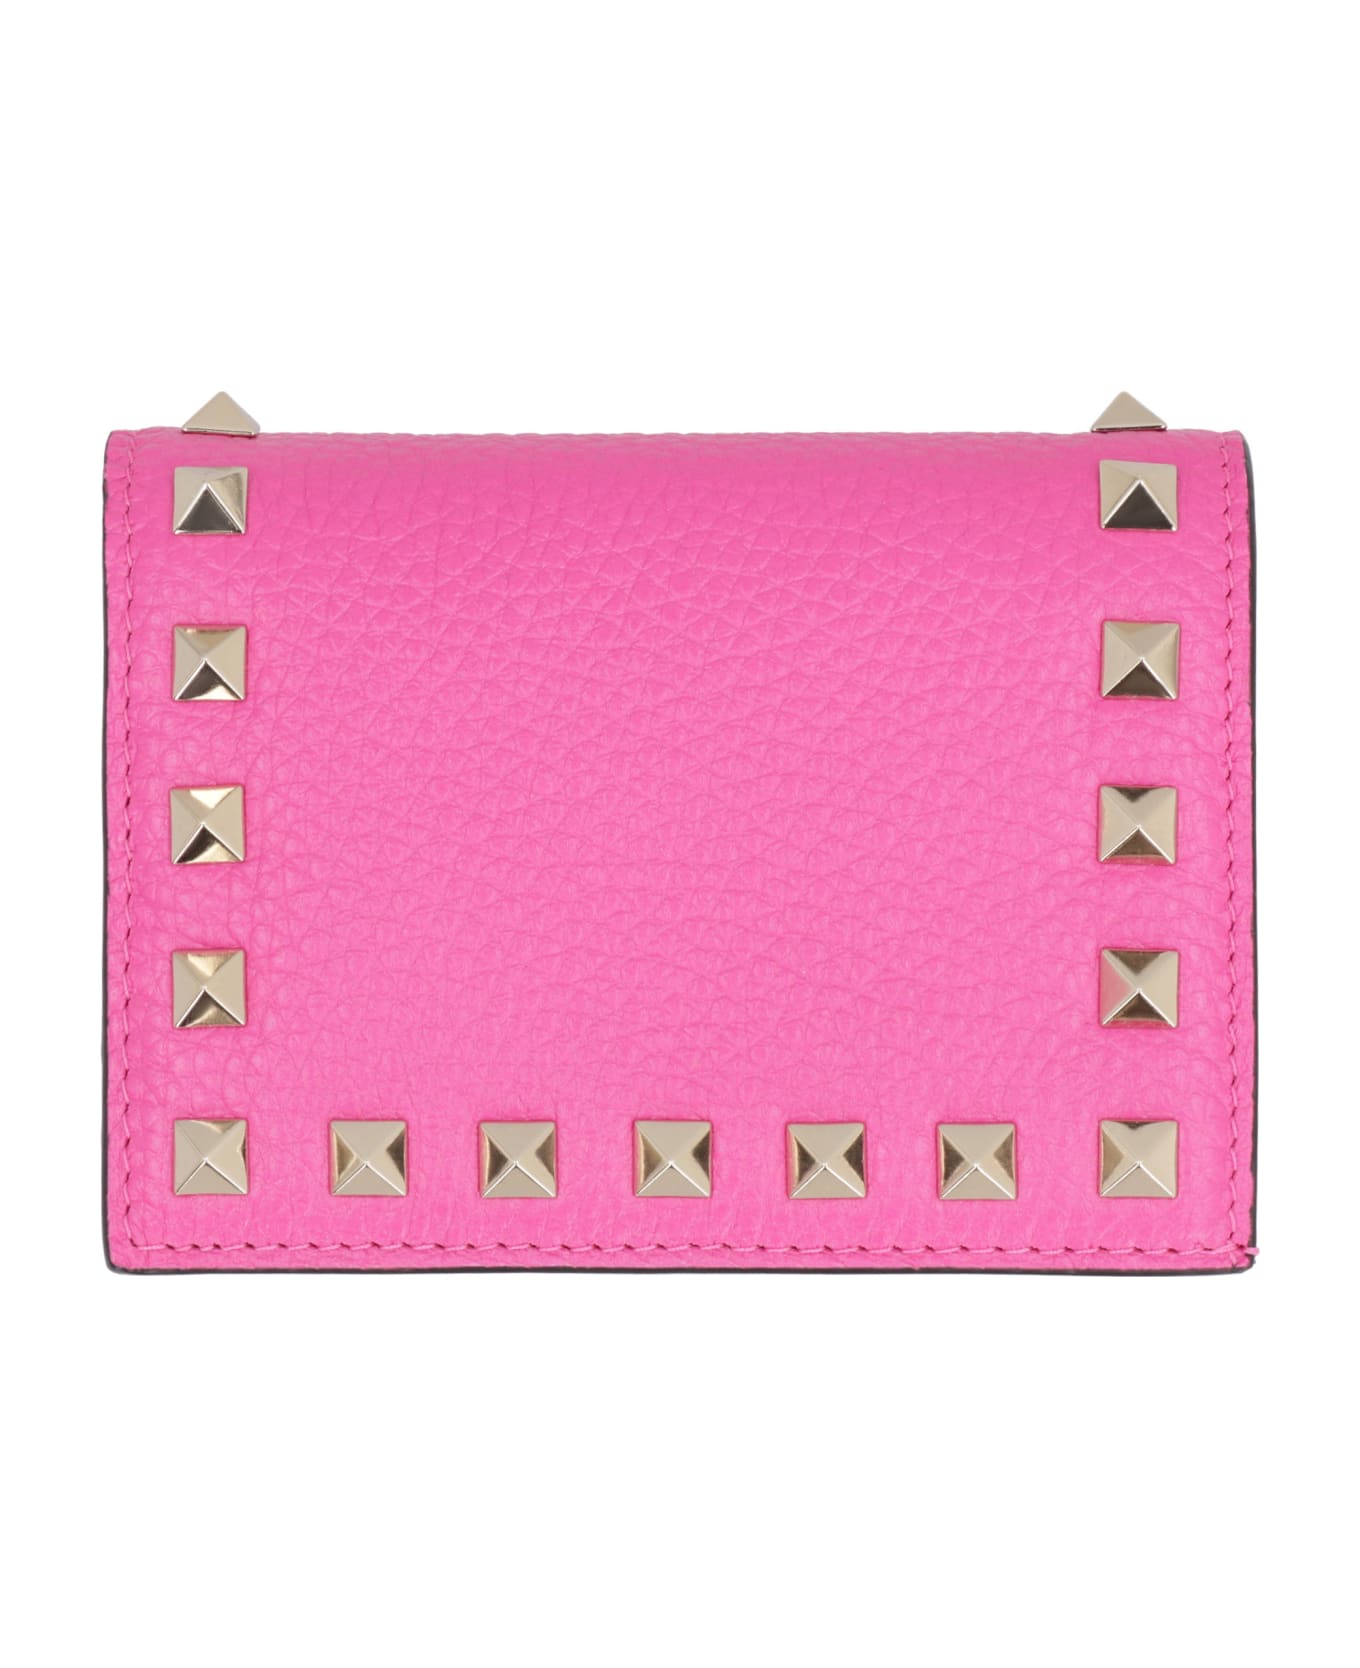 Valentino Garavani - Rockstud Small Leather Flap-over Wallet - Pink Pp 財布